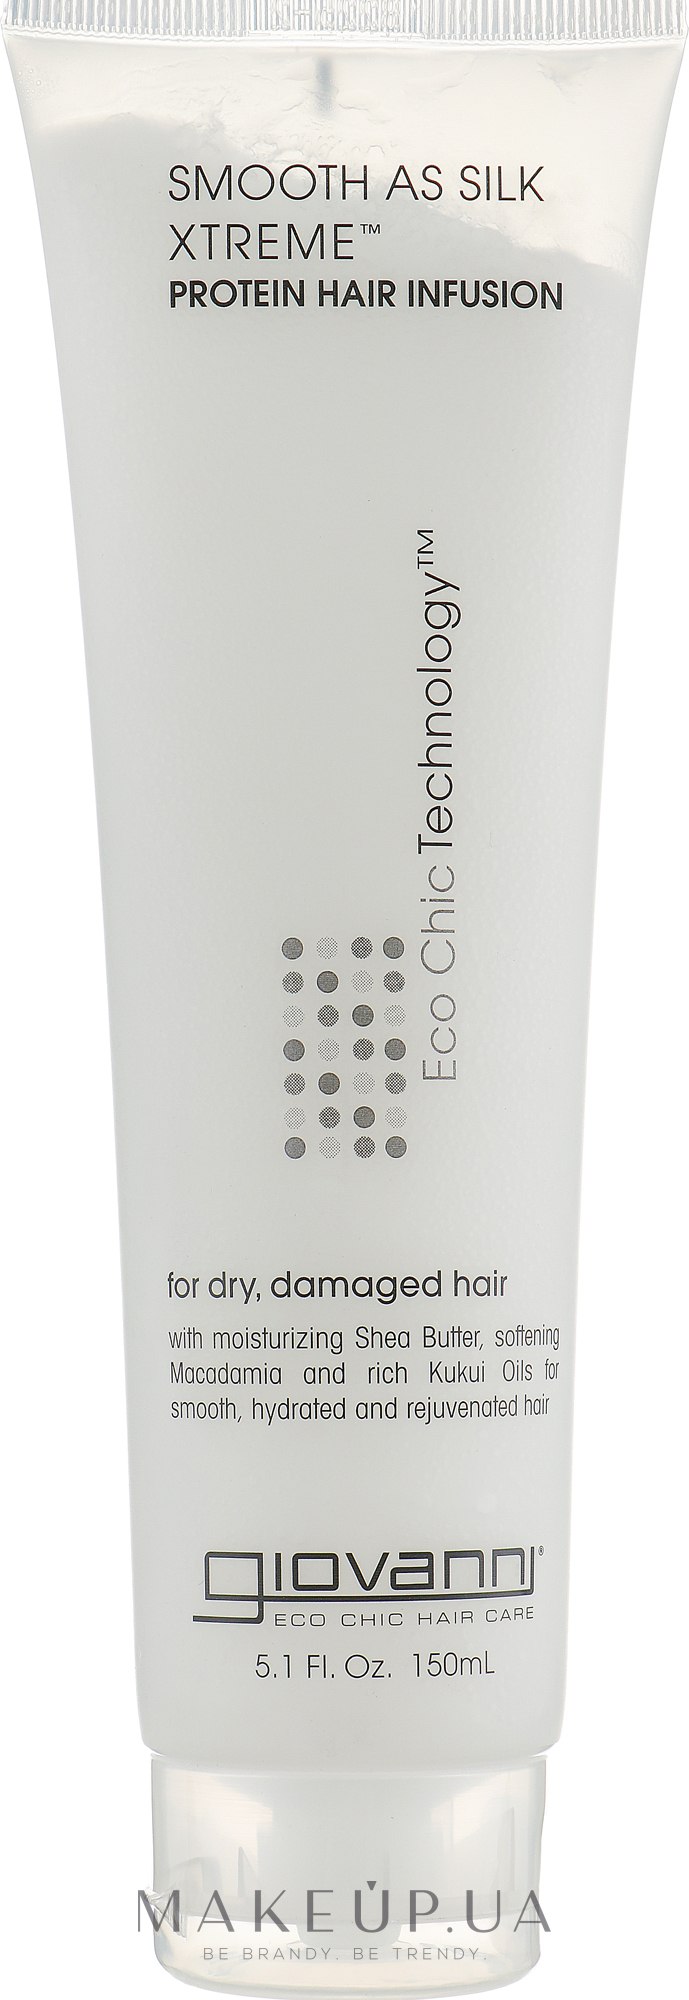 Білкова маска для волосся - Giovanni Eco Chic Hair Care Protein Hair Infusion — фото 150ml